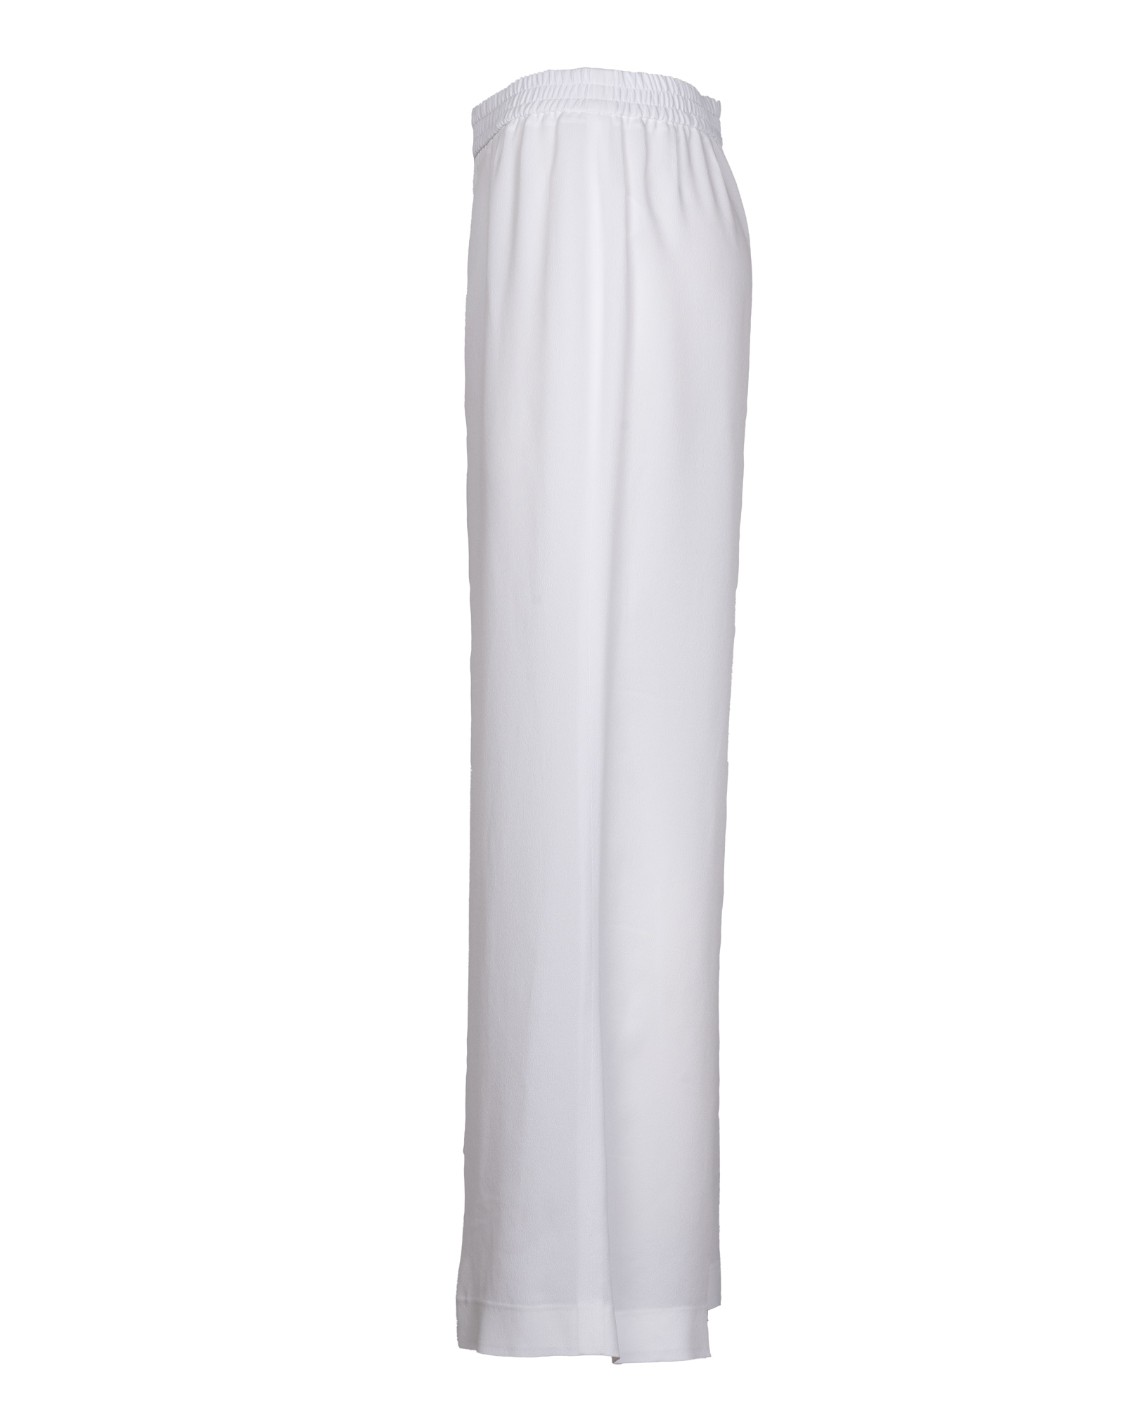 shop FABIANA FILIPPI Saldi Pantalone: Fabiana Filippi pantalone bianco.
Vita alta elasticizzata.
Comoda linea loose fit.
Composizione: 57% Acetato 43% Seta.
Fabbricato in Italia.. PAD272W382-21 number 9949022